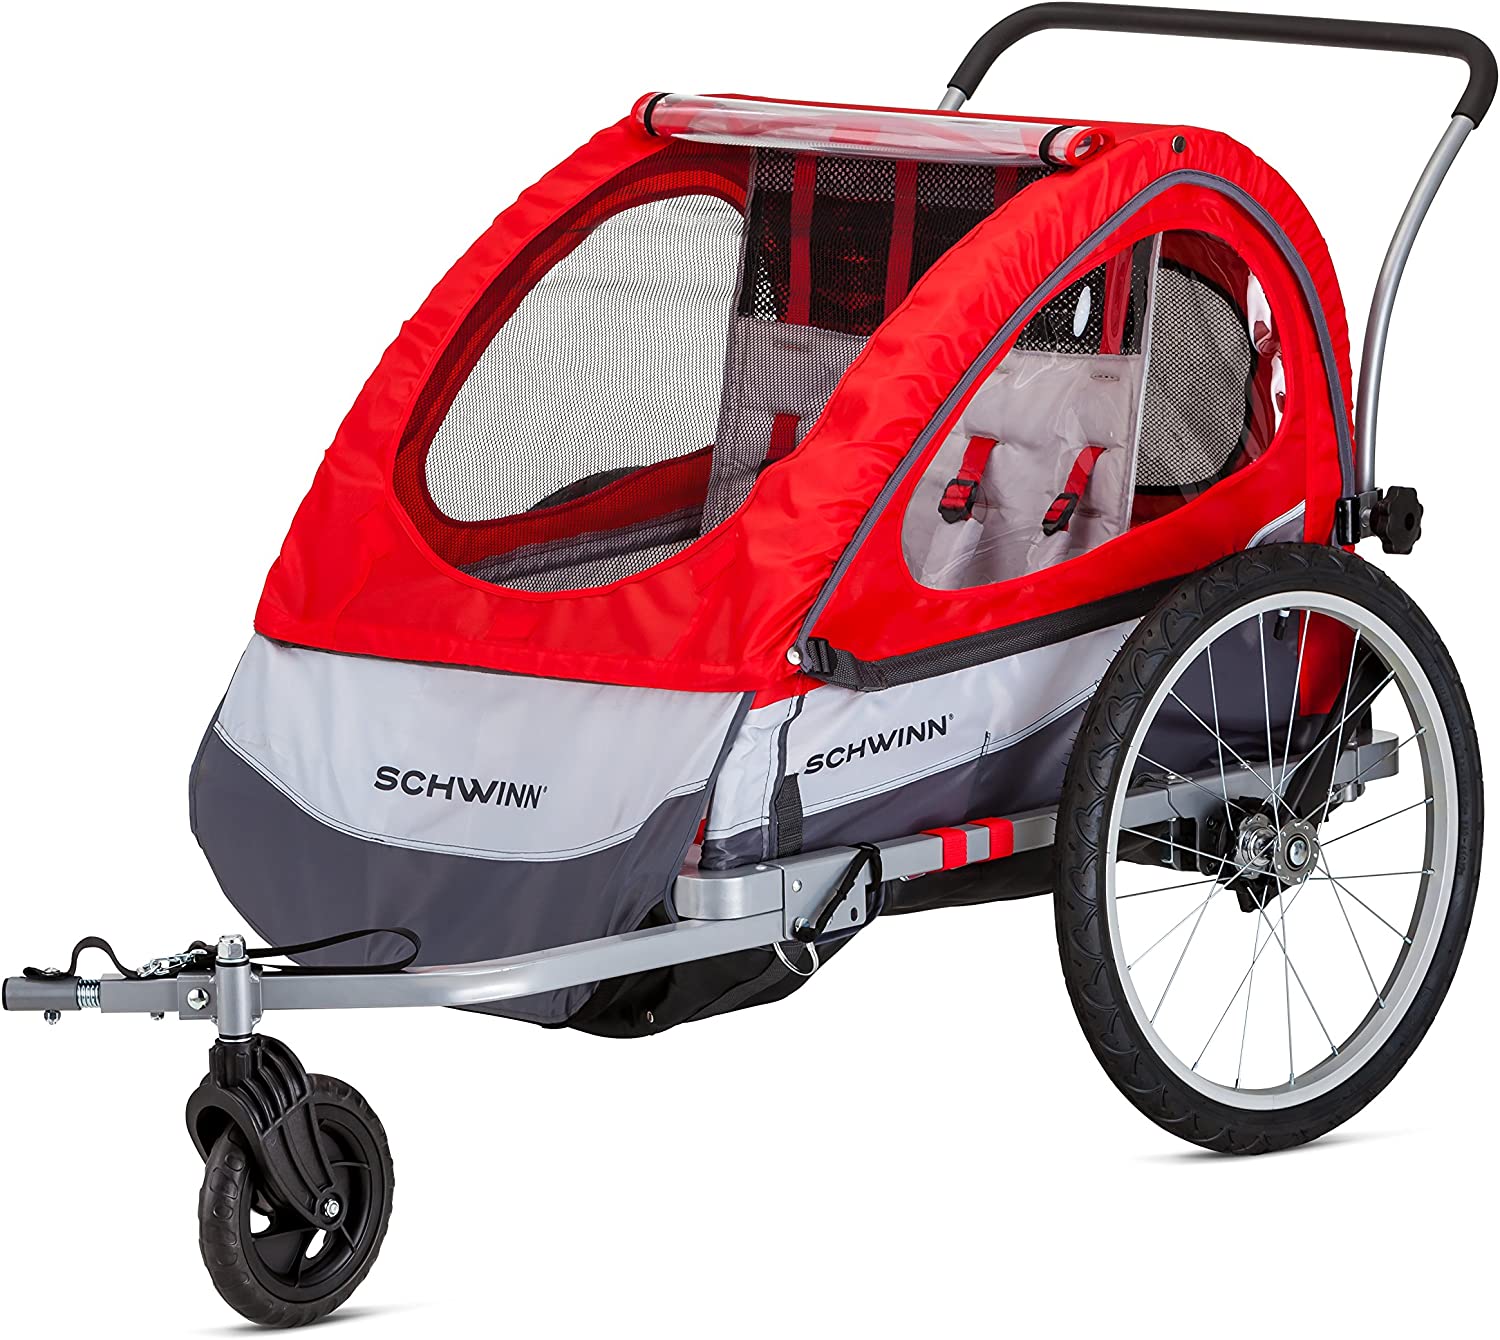 Schwinn Echo, and Trailblazer Child Bike Trailer, Single and Double Baby Carrier, Canopy, inch Wheels Trailblazer - 2 Seat Bike Trailer Red - image 1 of 7